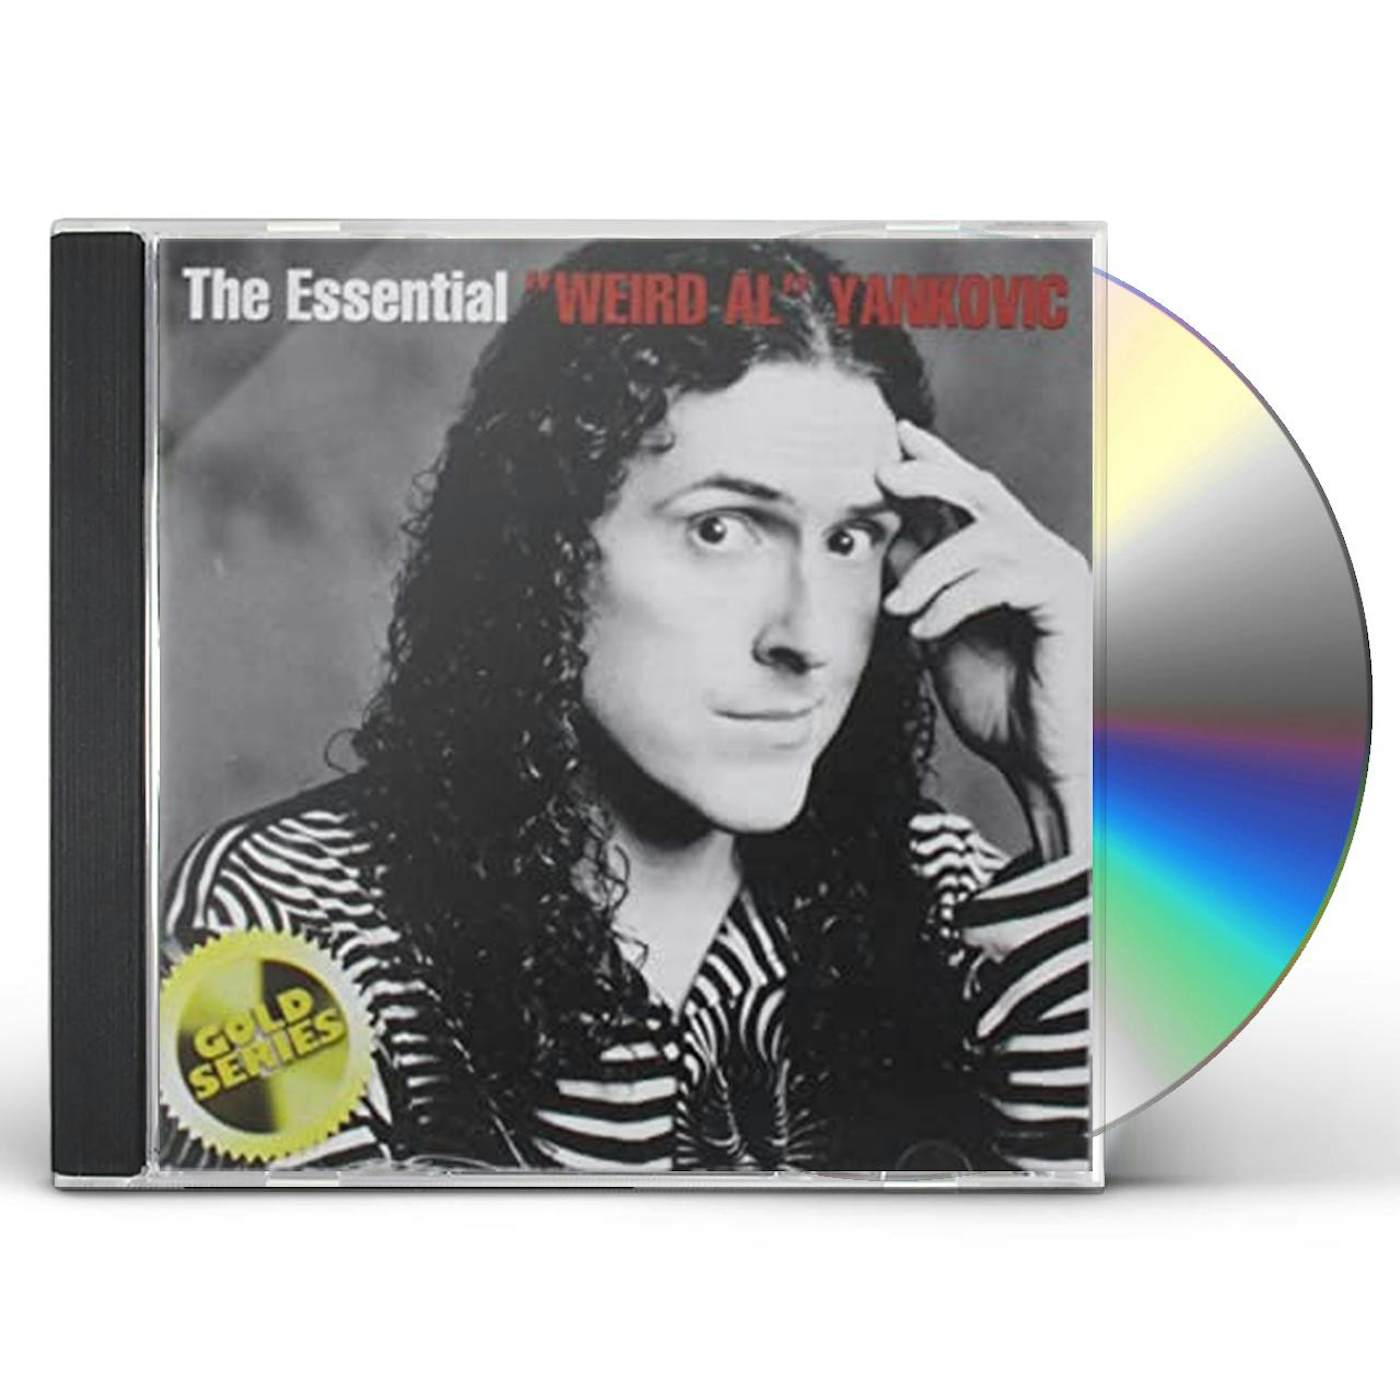 ESSENTIAL "Weird Al" Yankovic (GOLD SERIES) CD